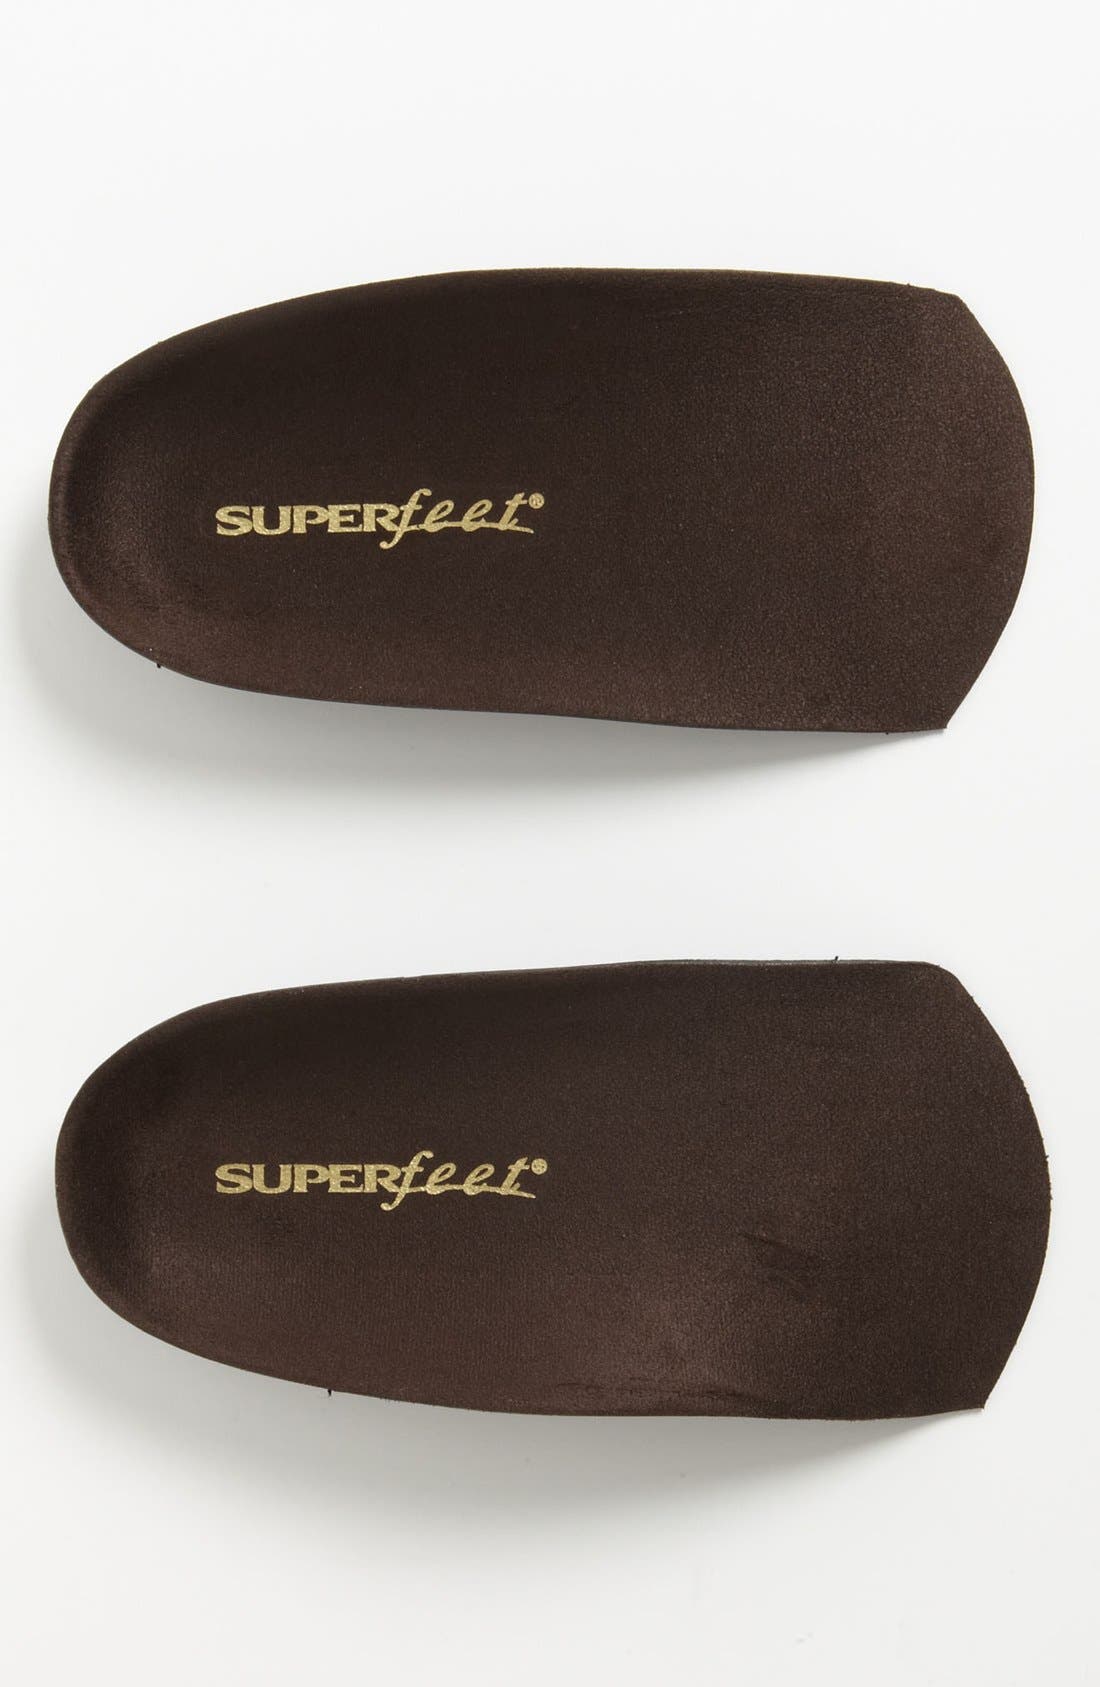 Men's Superfeet Shoe Care \u0026 Accessories 